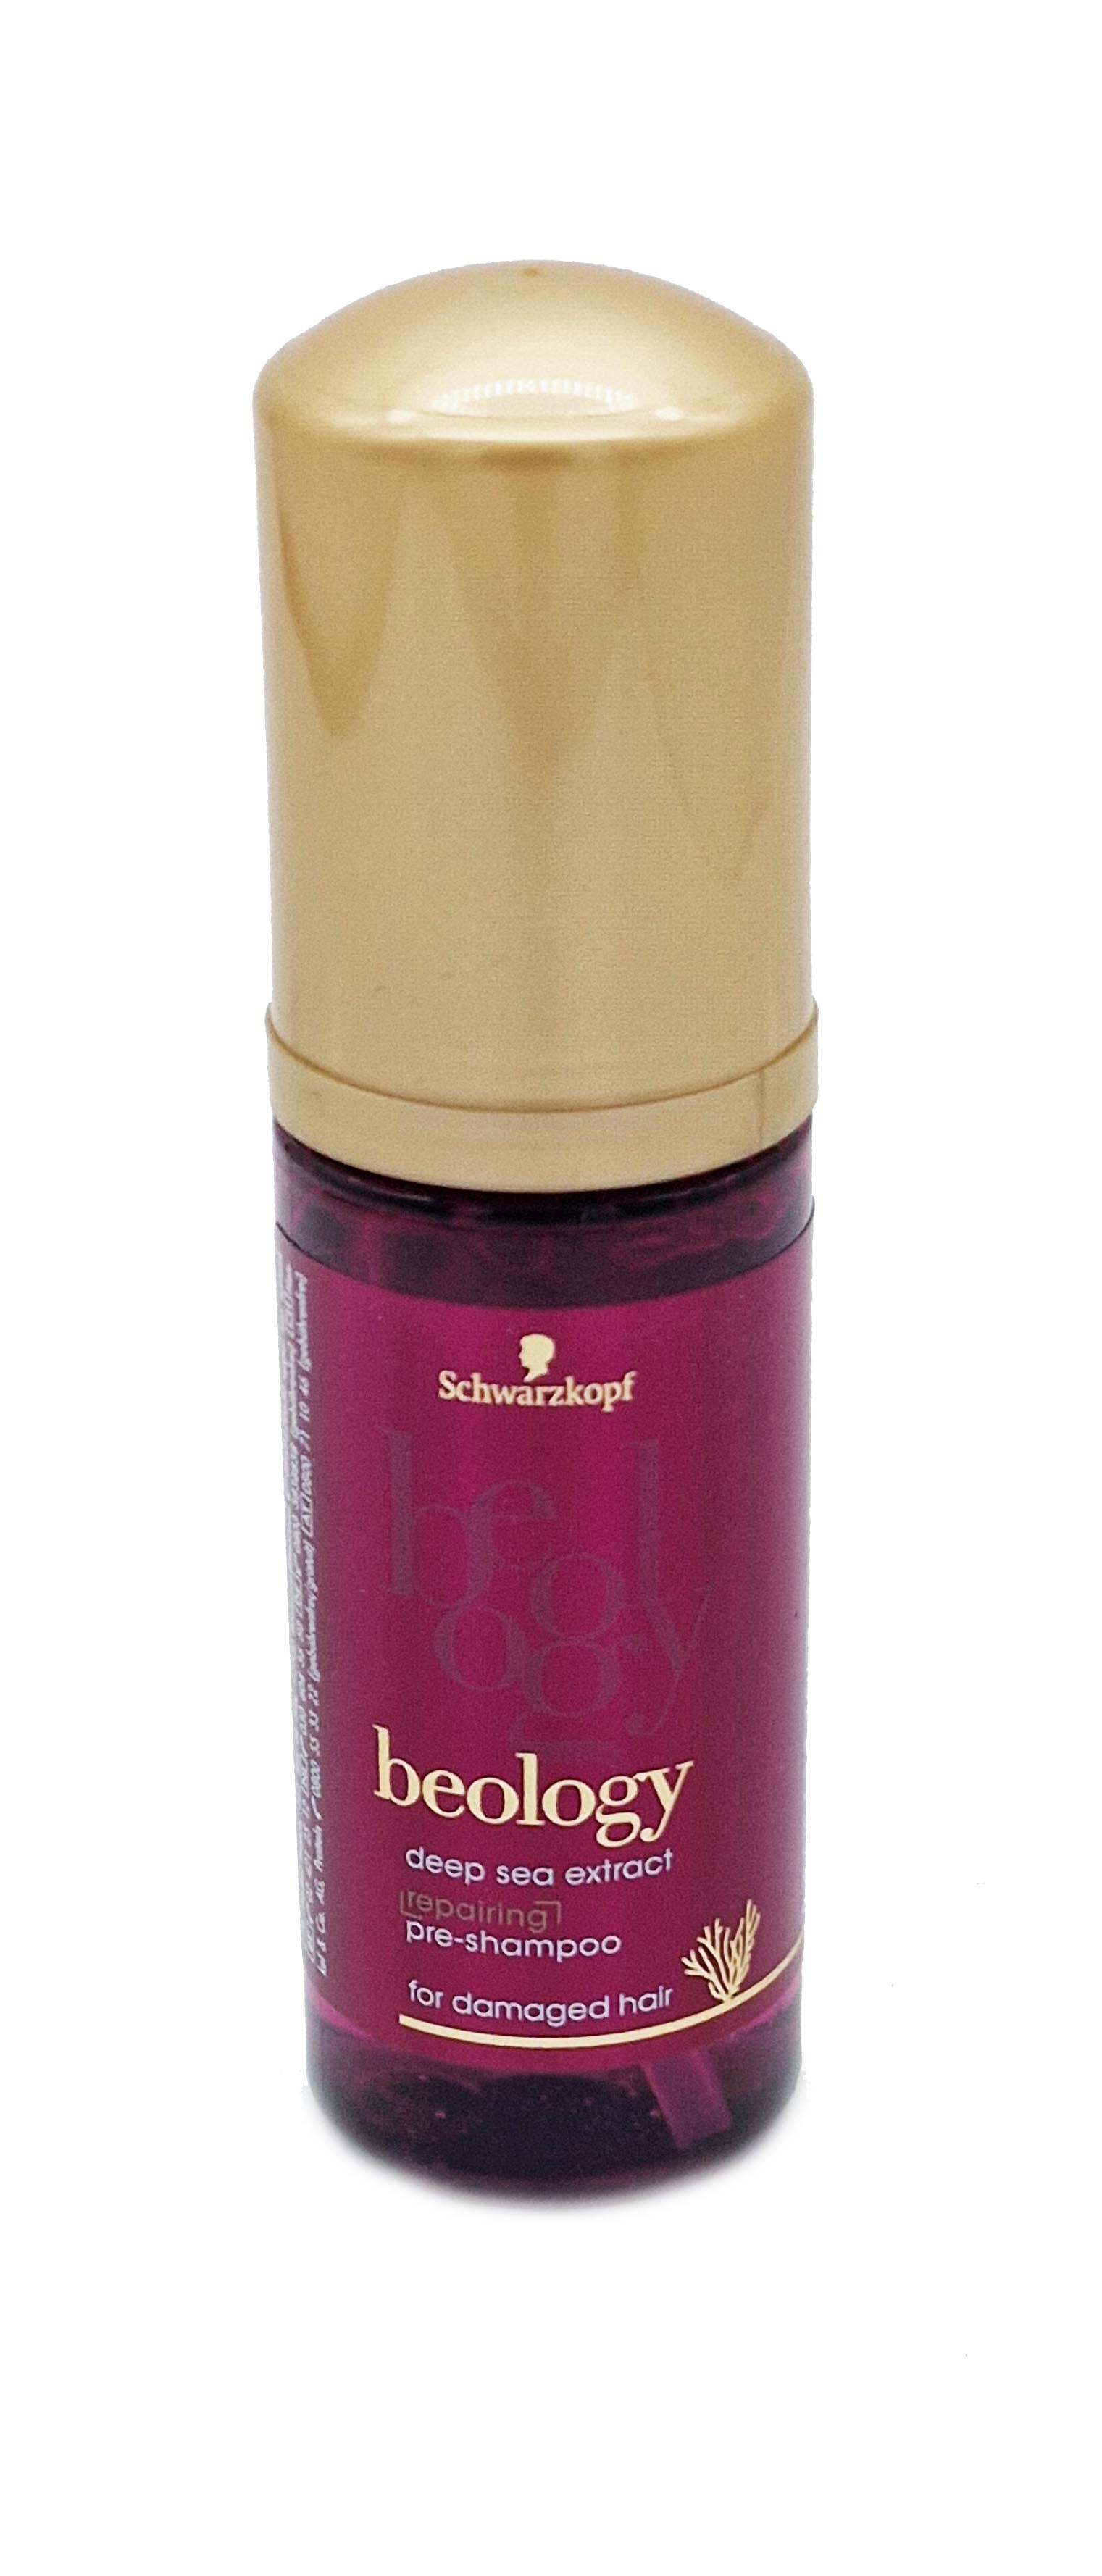 Beology Pre-Shampoo 50ml Repair